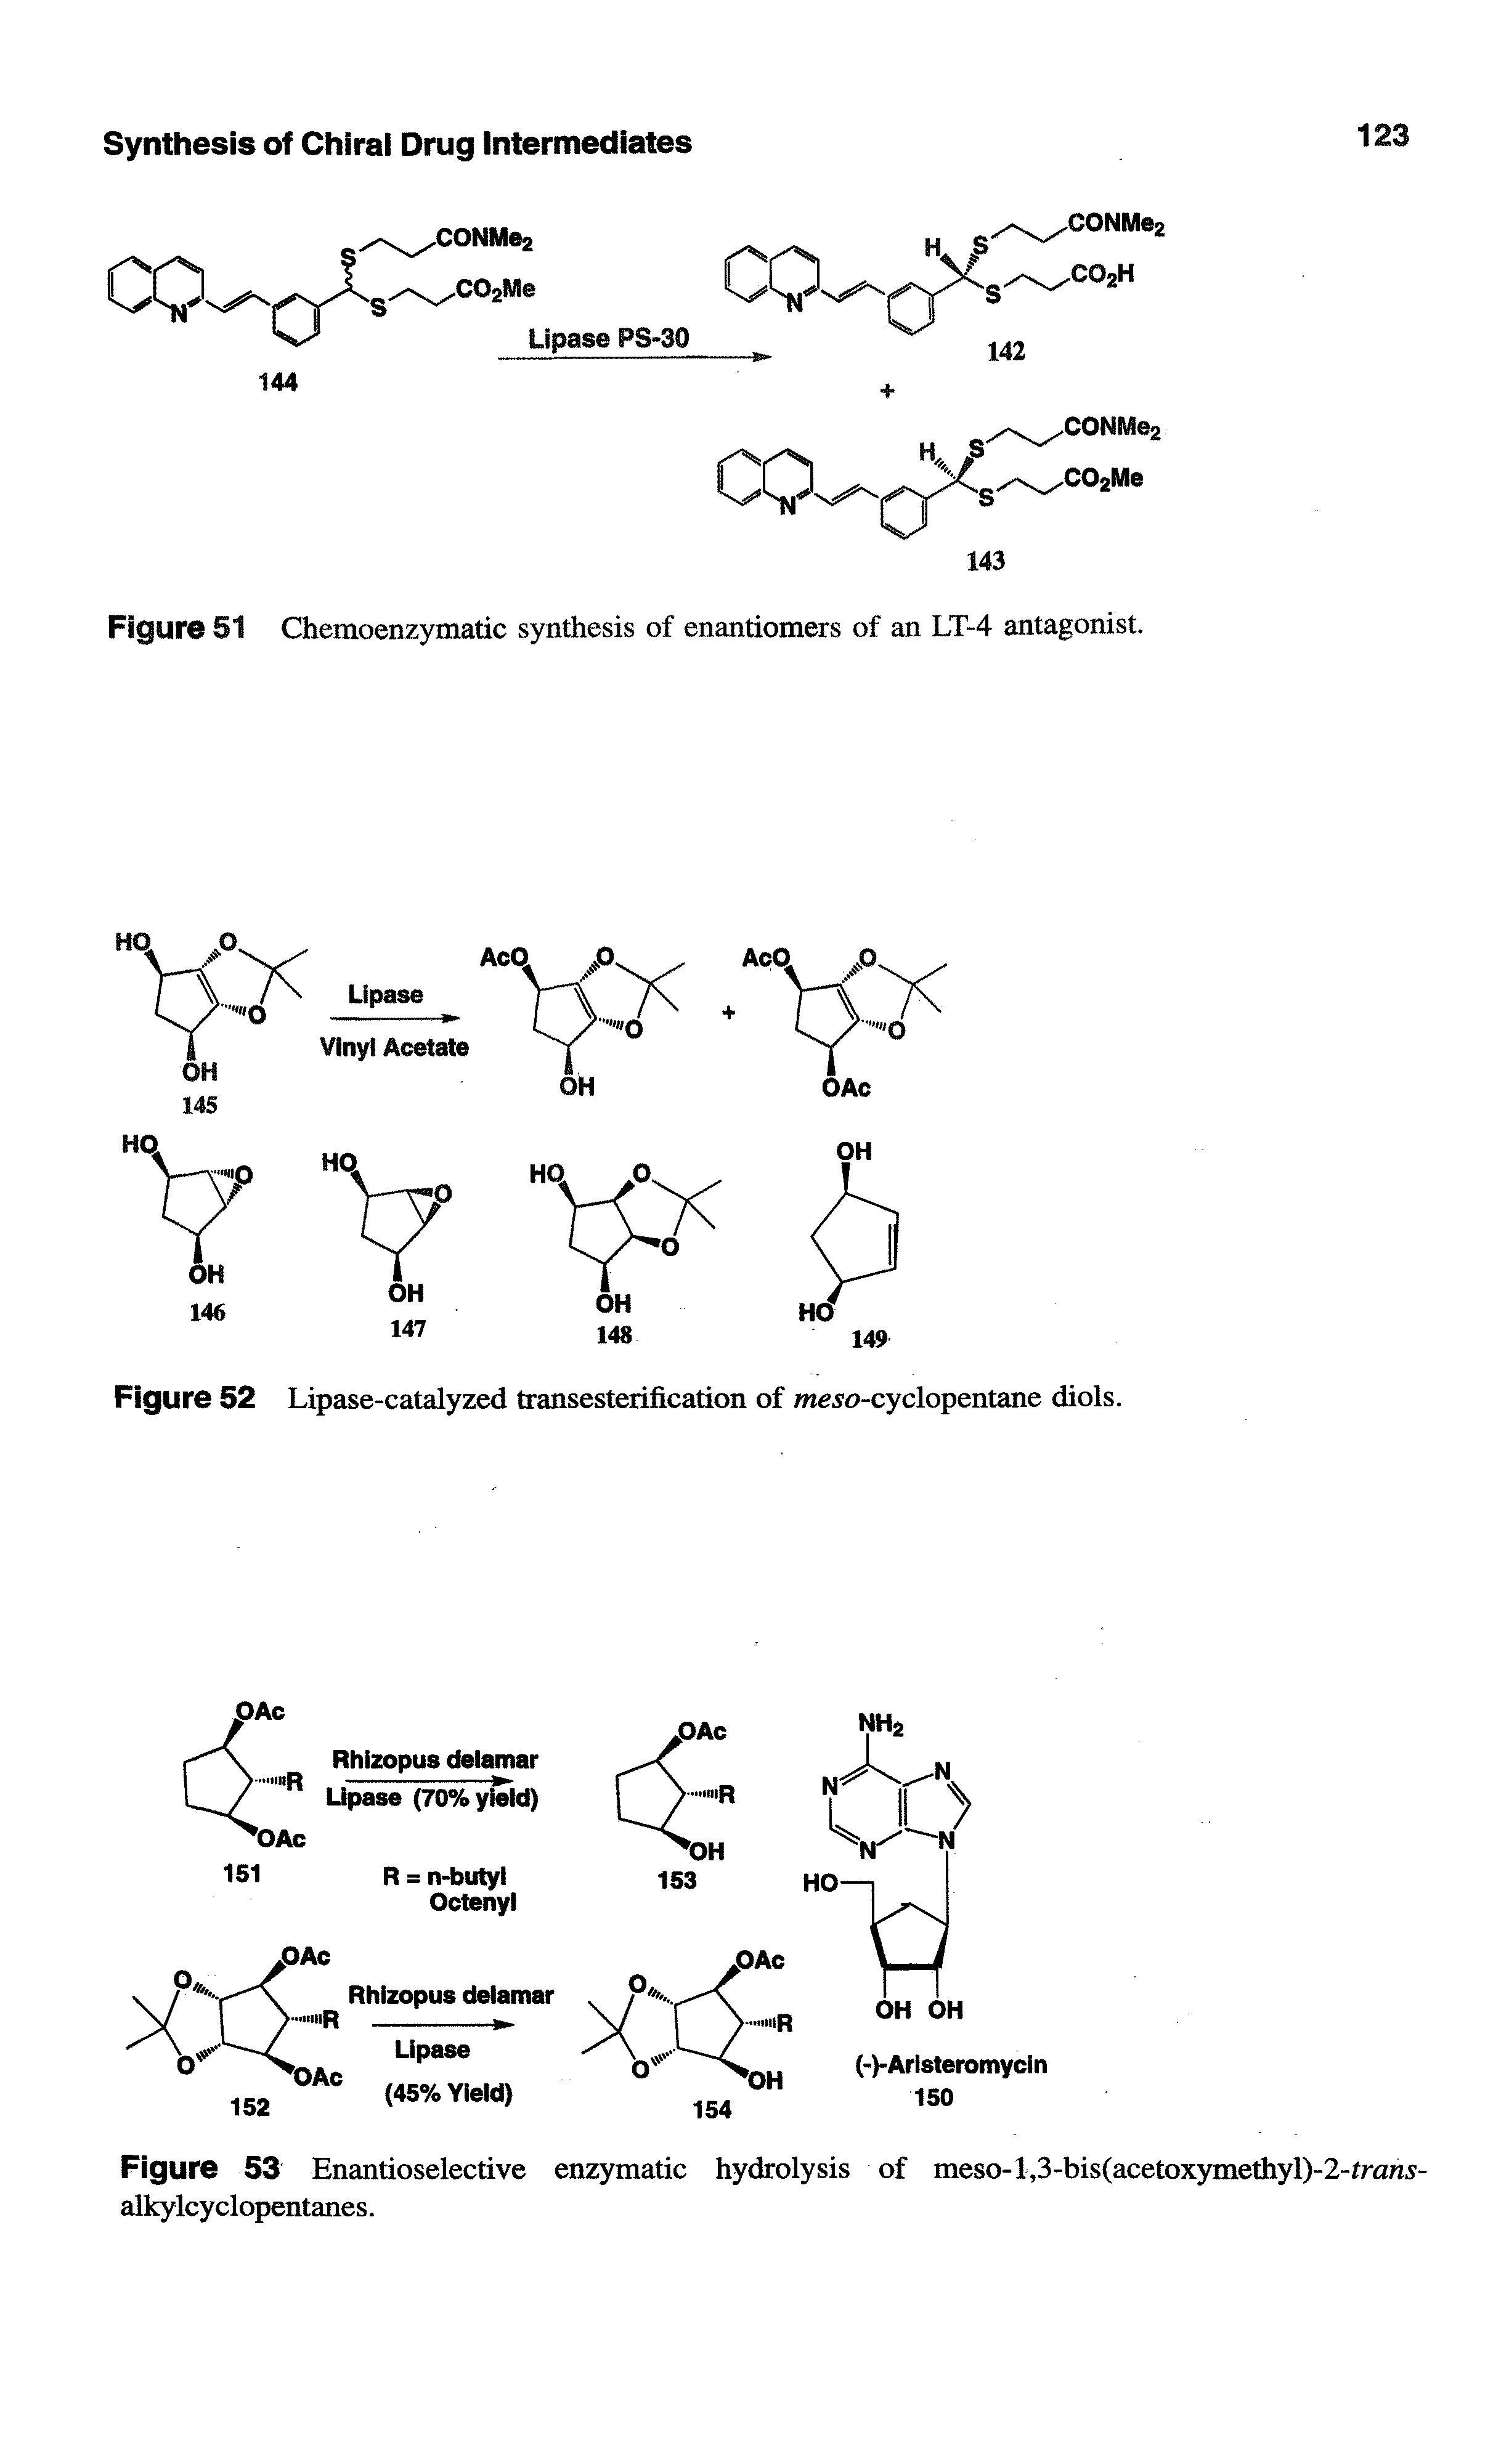 Figure 53 Enantioselective enzymatic hydrolysis of meso-l,3-bis(acetoxymethyl)-2-tran5-alkylcyclopentanes.